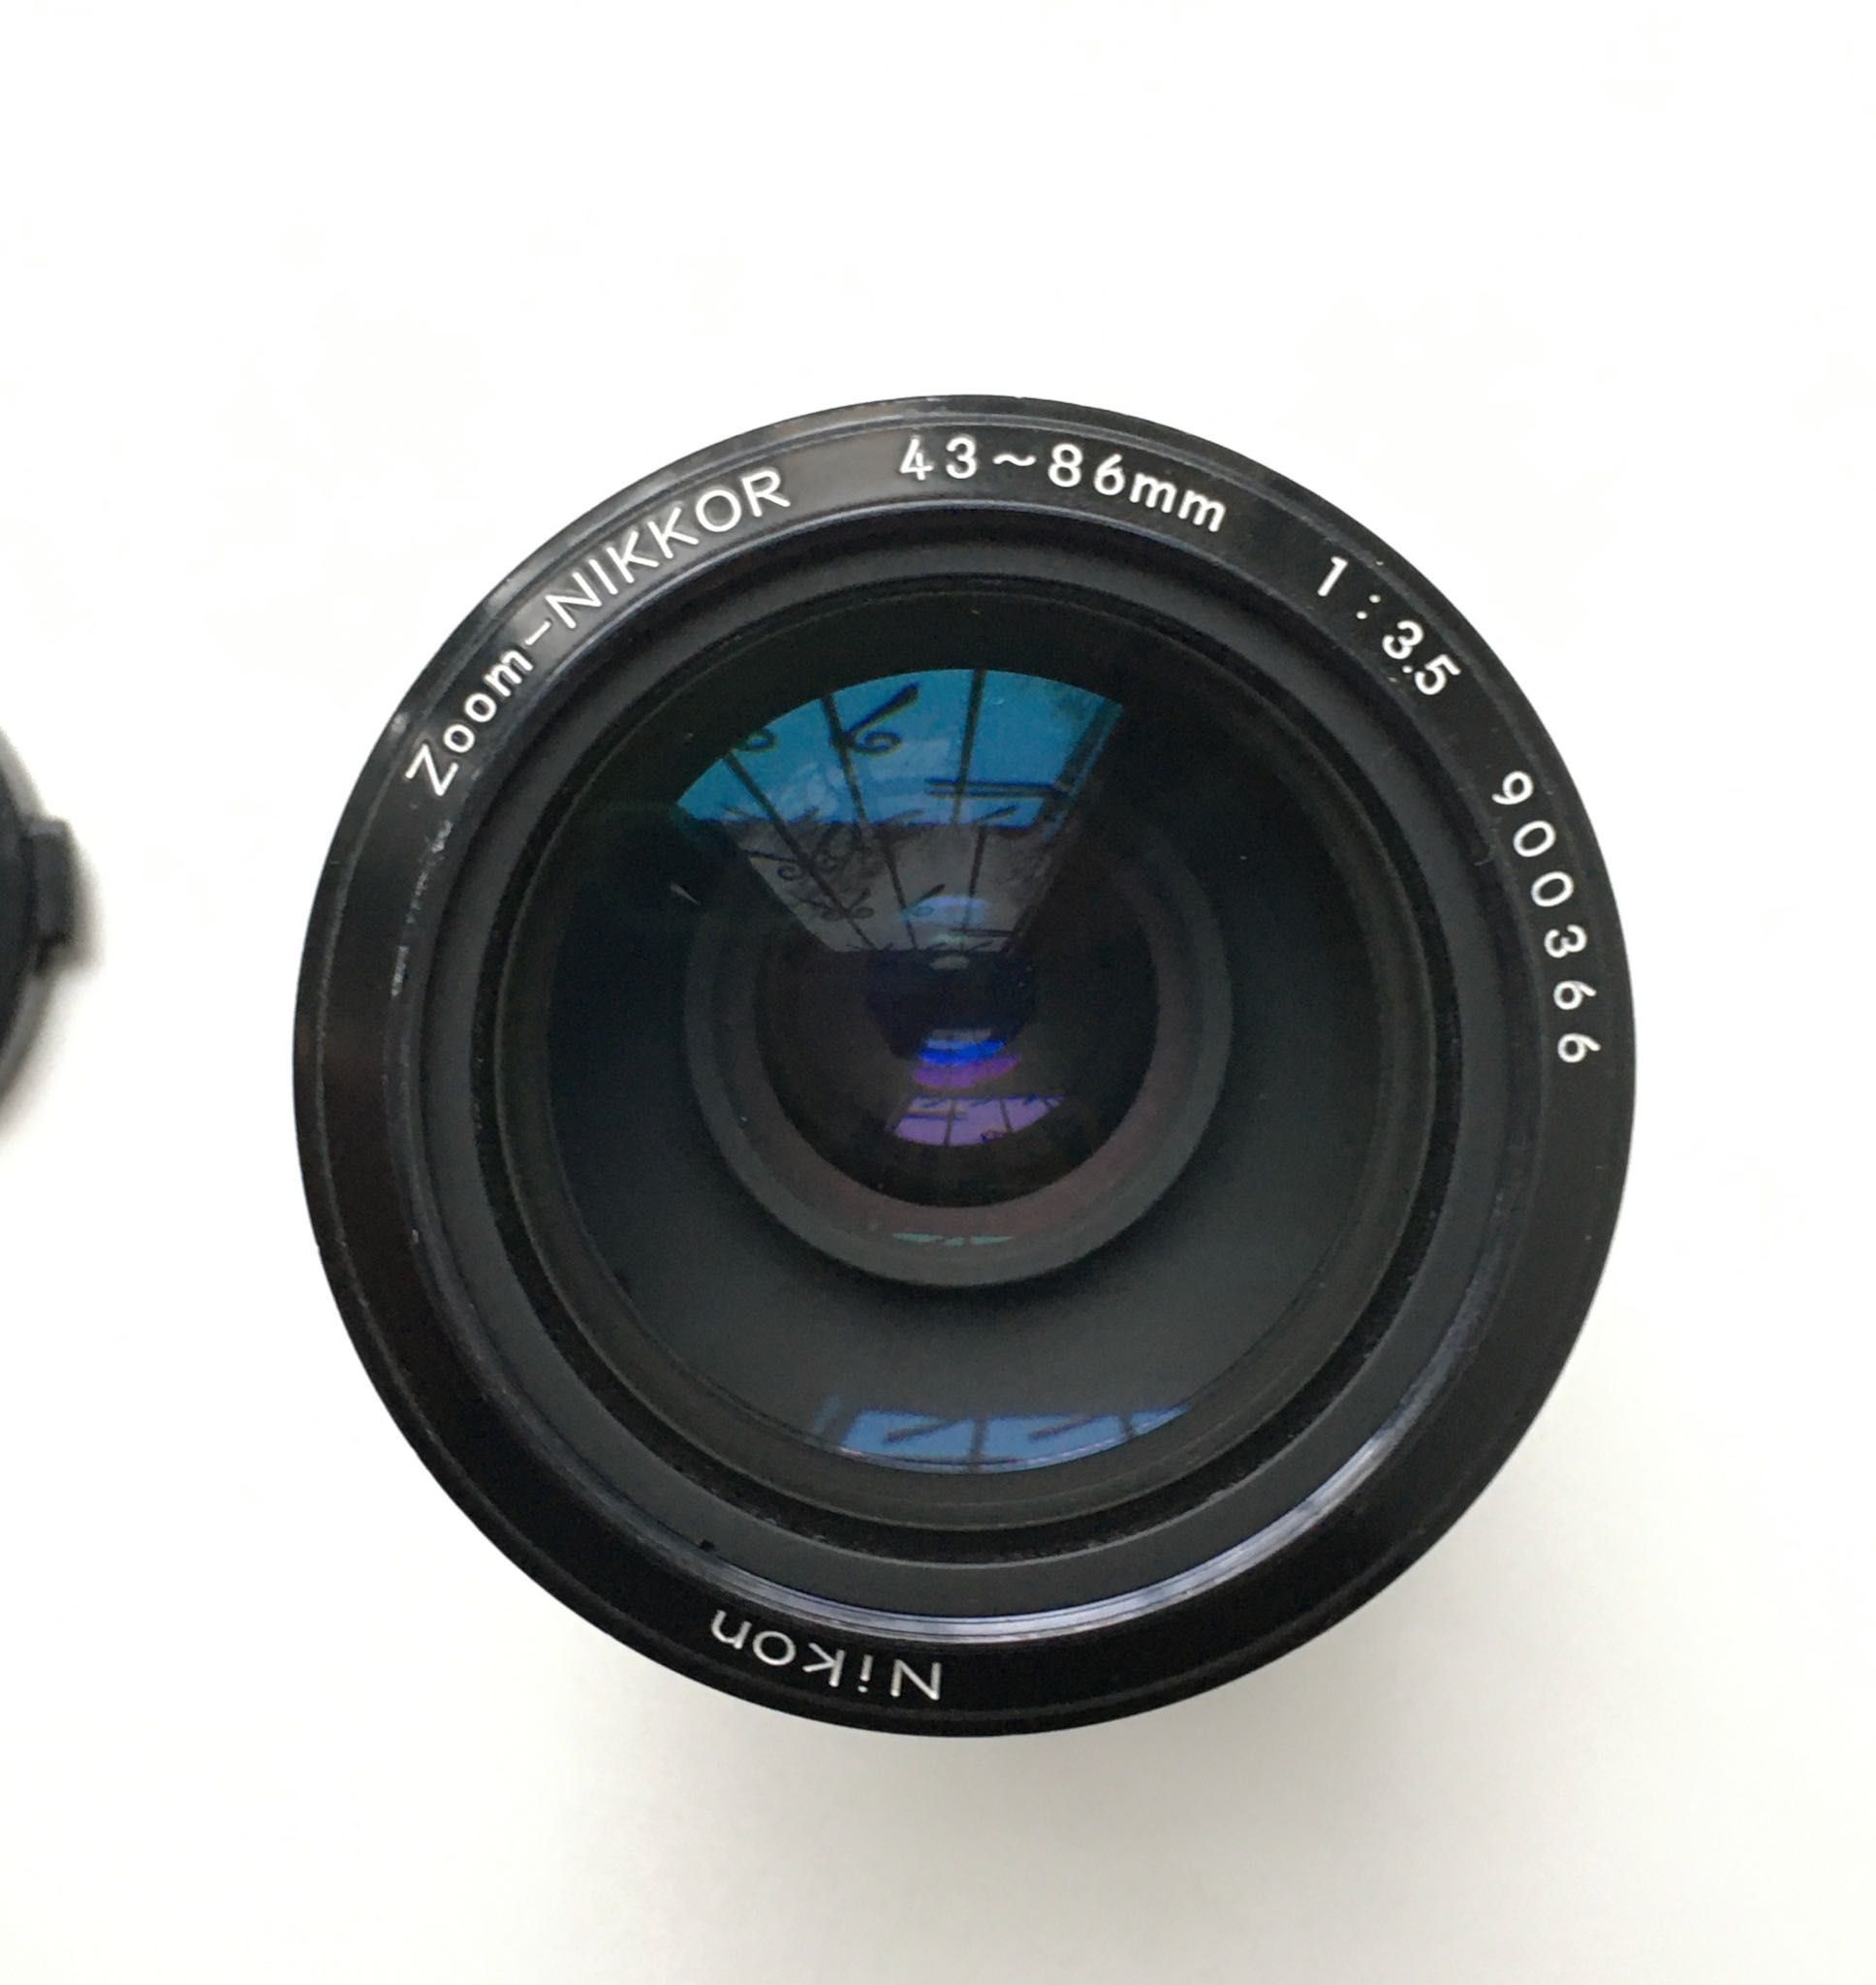 Nikon Zoom-Nikkor 43-86mm f/3.5